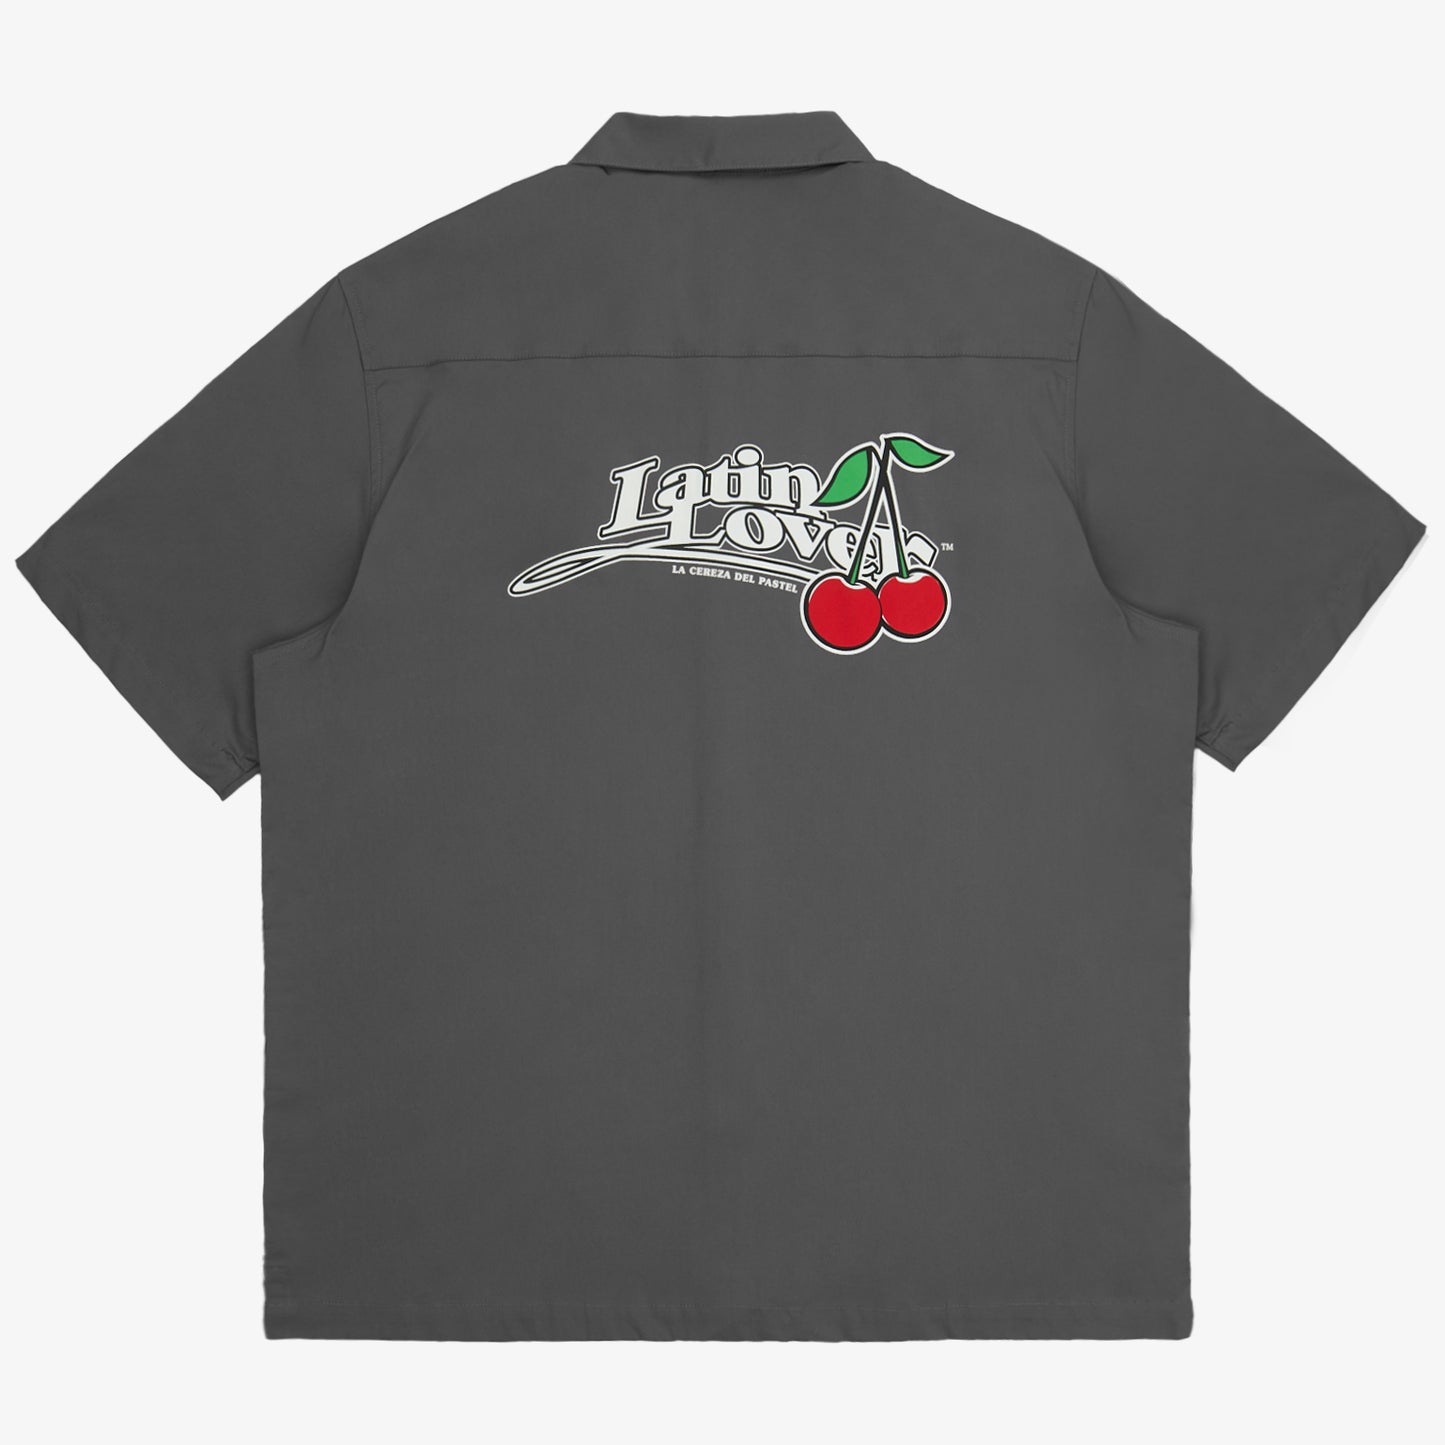 Cherry La Cereza del Pastel Shirt